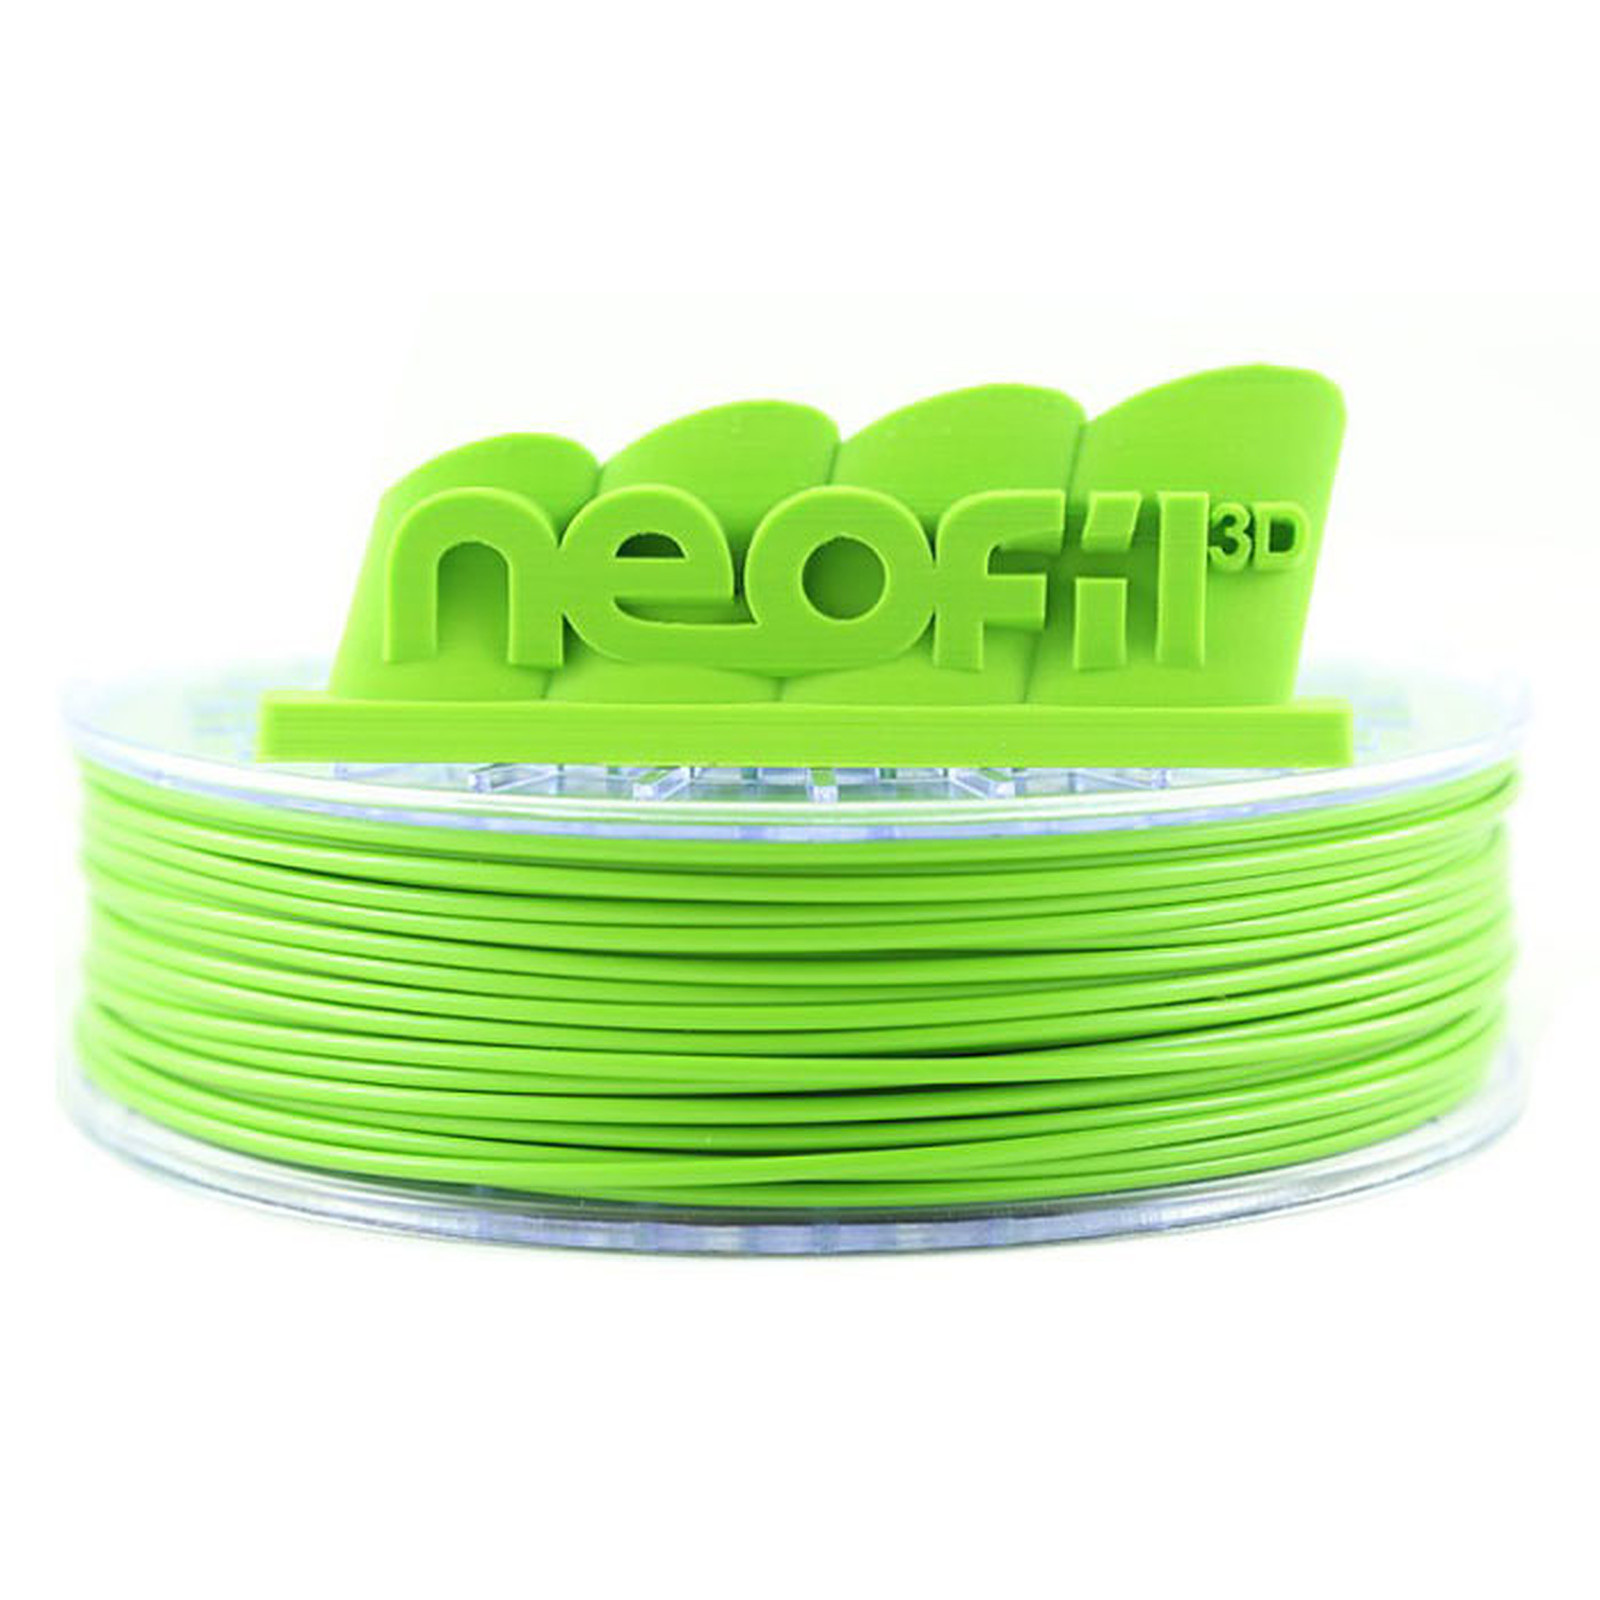 Neofil3D Bobine ABS 1.75mm 750g - Vert pomme - Filament 3D Neofil3D